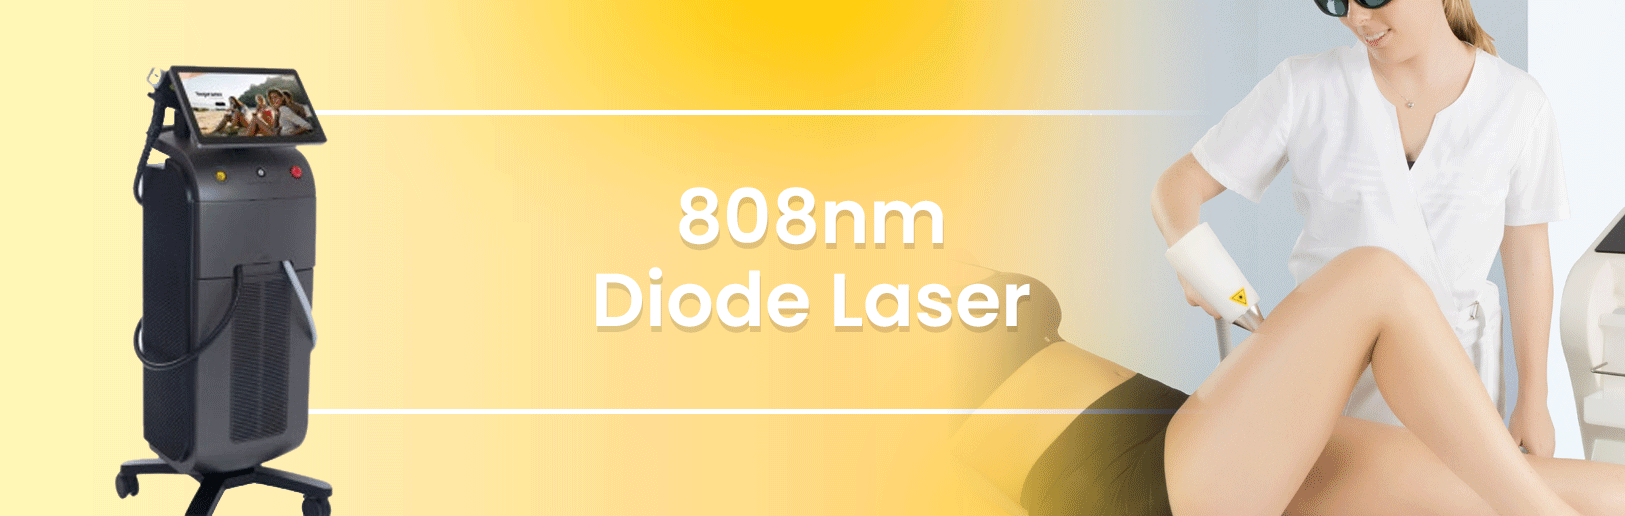 808nm Diode Laser﻿ machines